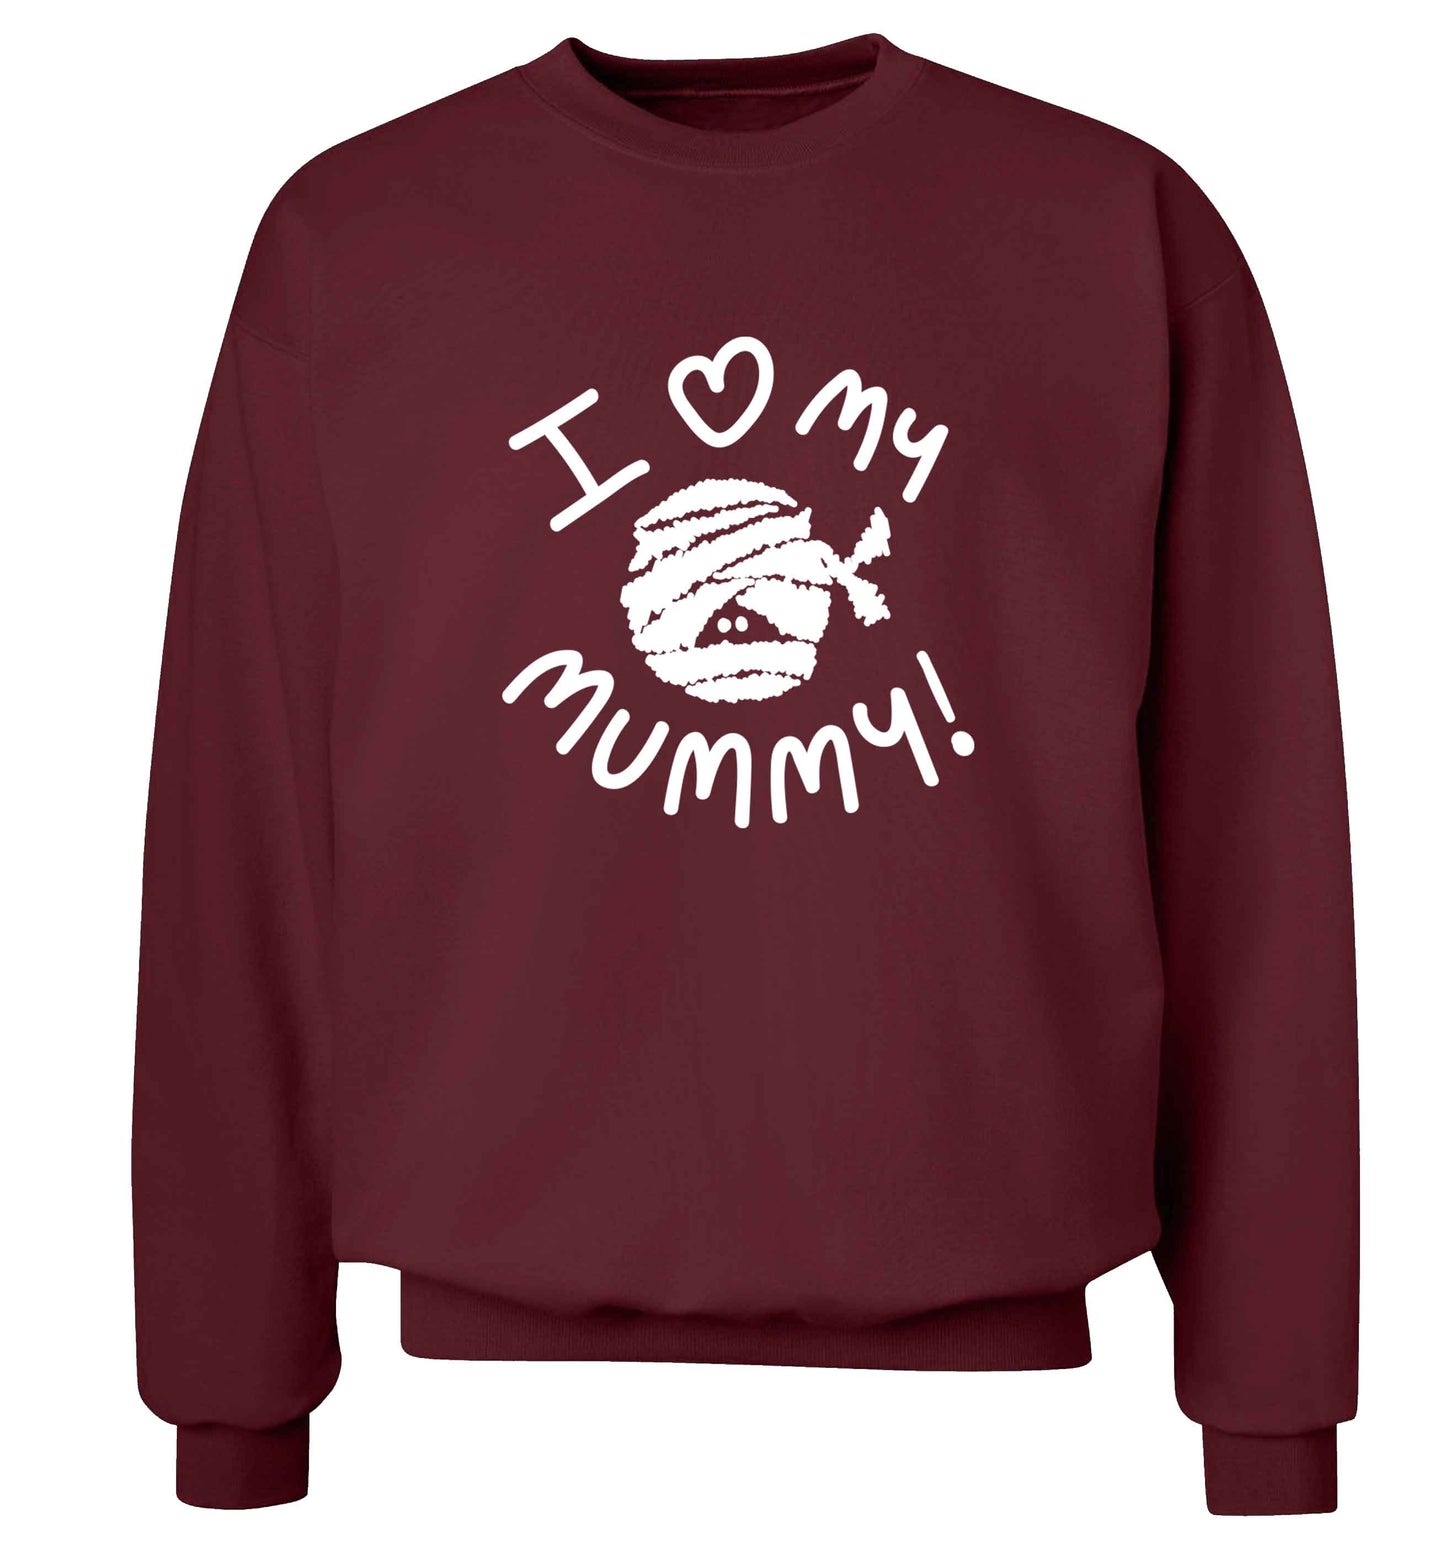 I love my mummy halloween pun adult's unisex maroon sweater 2XL